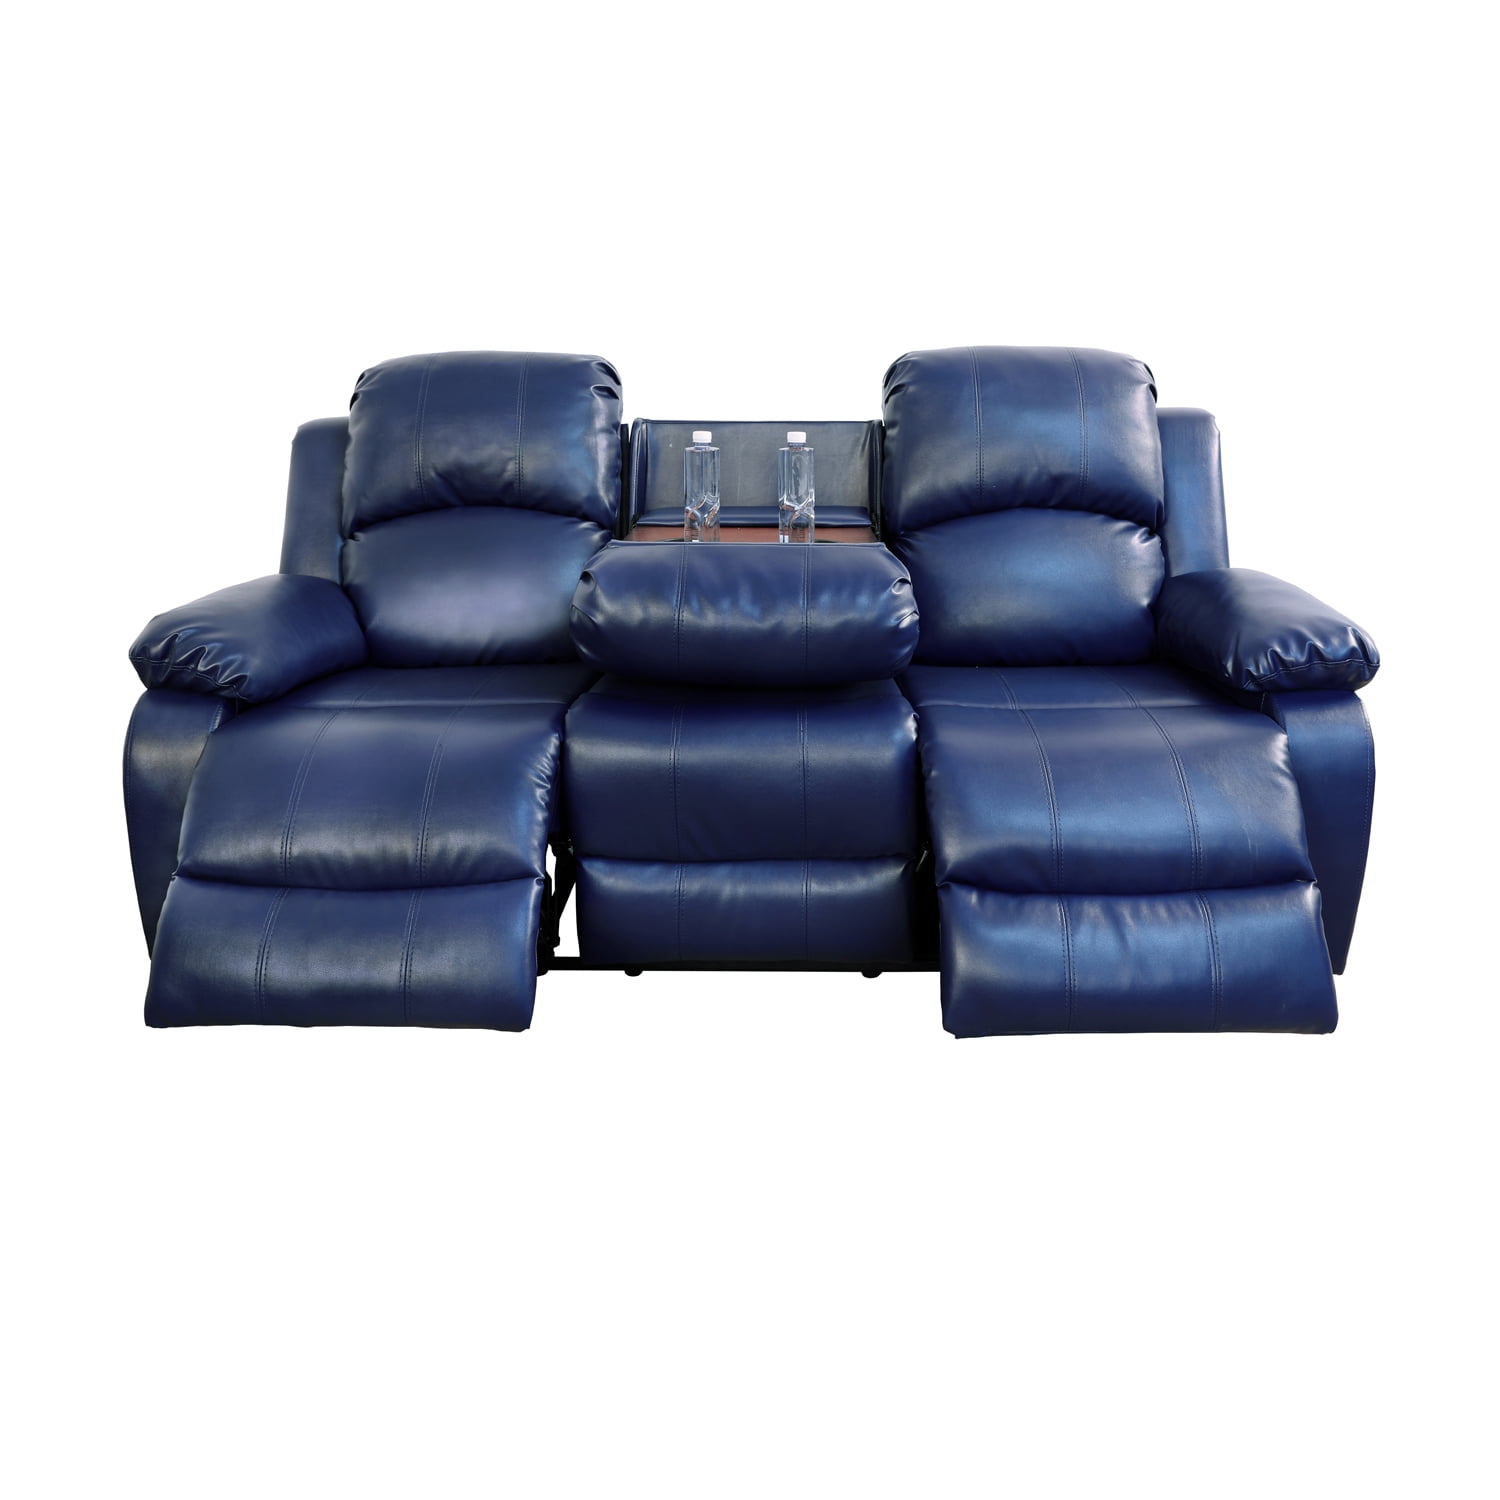 Ainehome Furniture Recliner Sofa Blue